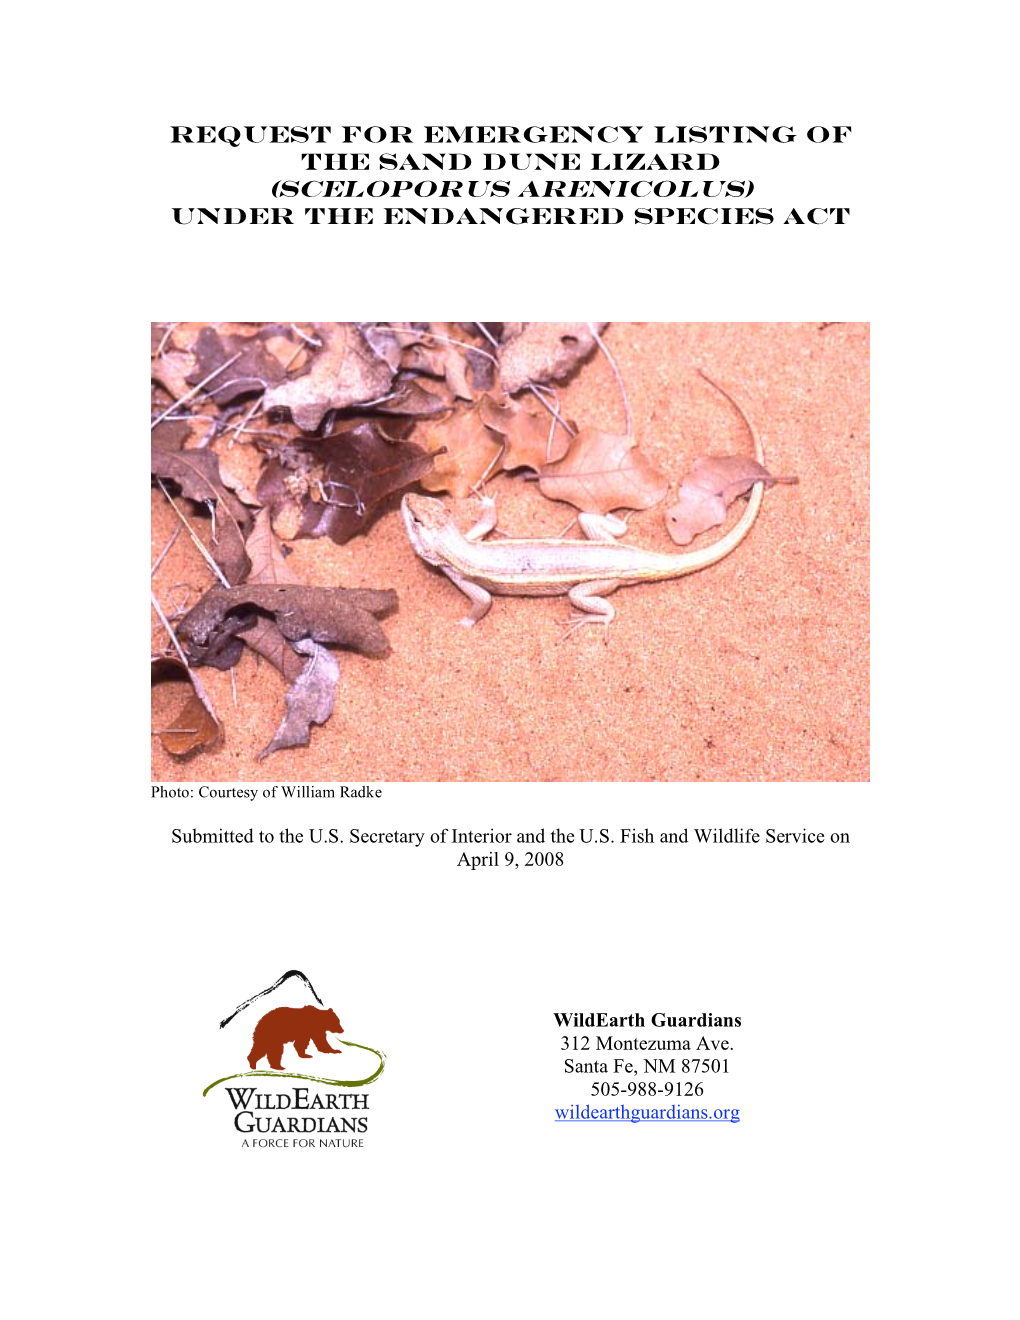 (Sceloporus Arenicolus) Under the Endangered Species Act